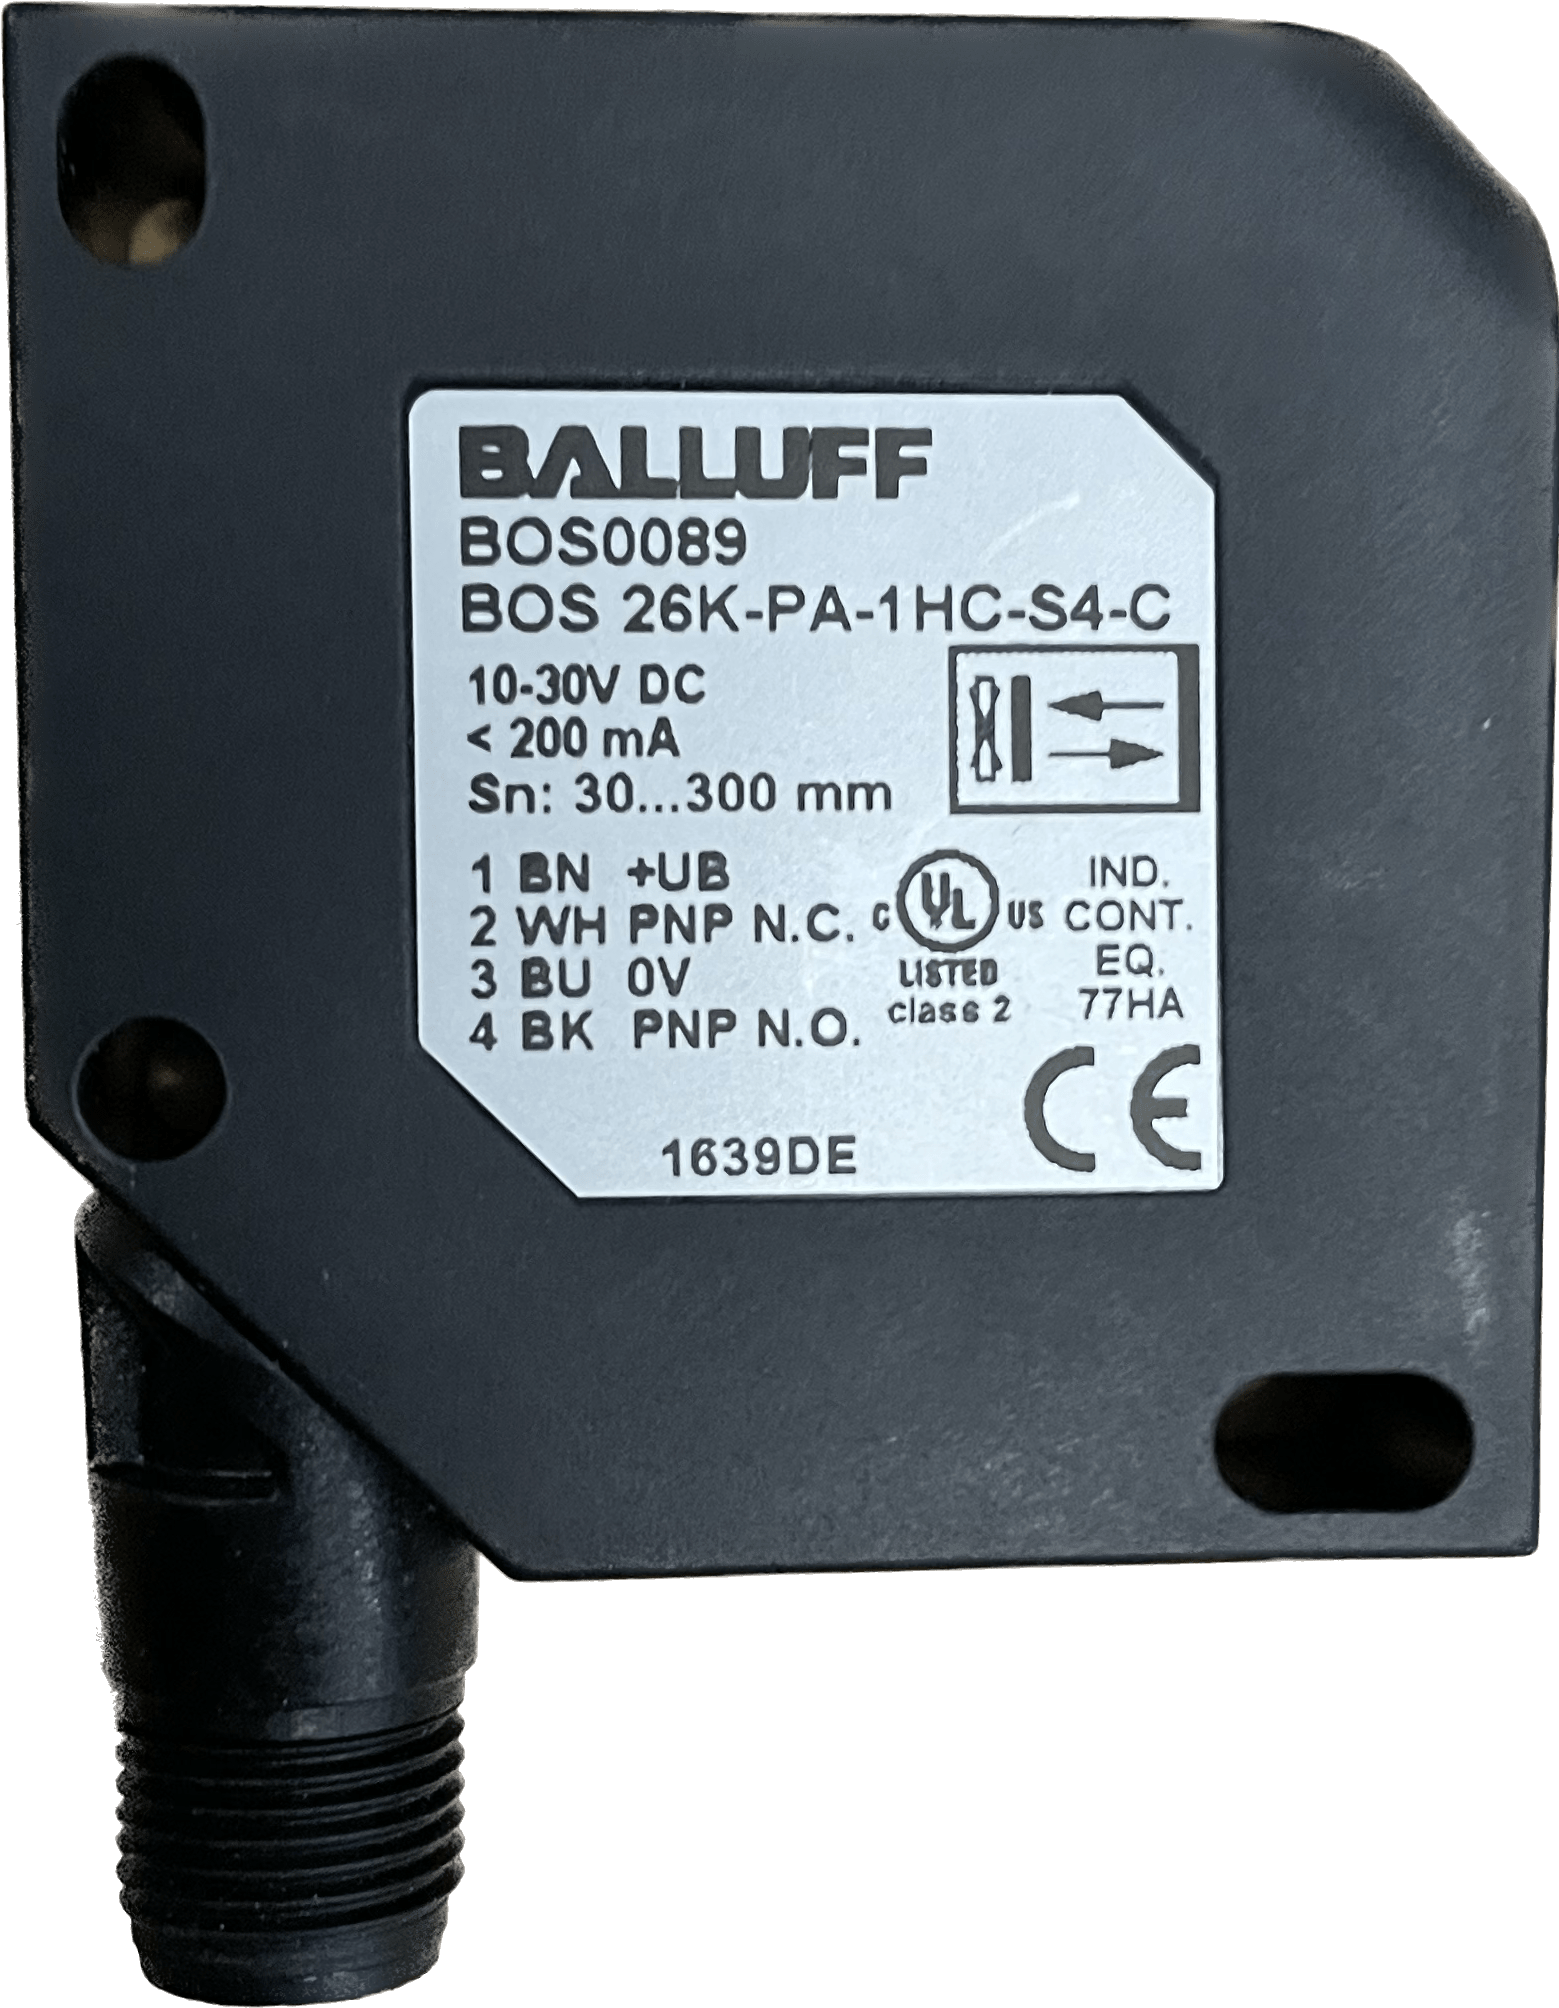 BALLUFF Lichttaster mit Hintergrundausblendung BOS 26K-PA-1HC-S4-C - #product_category# | Klenk Maschinenhandel